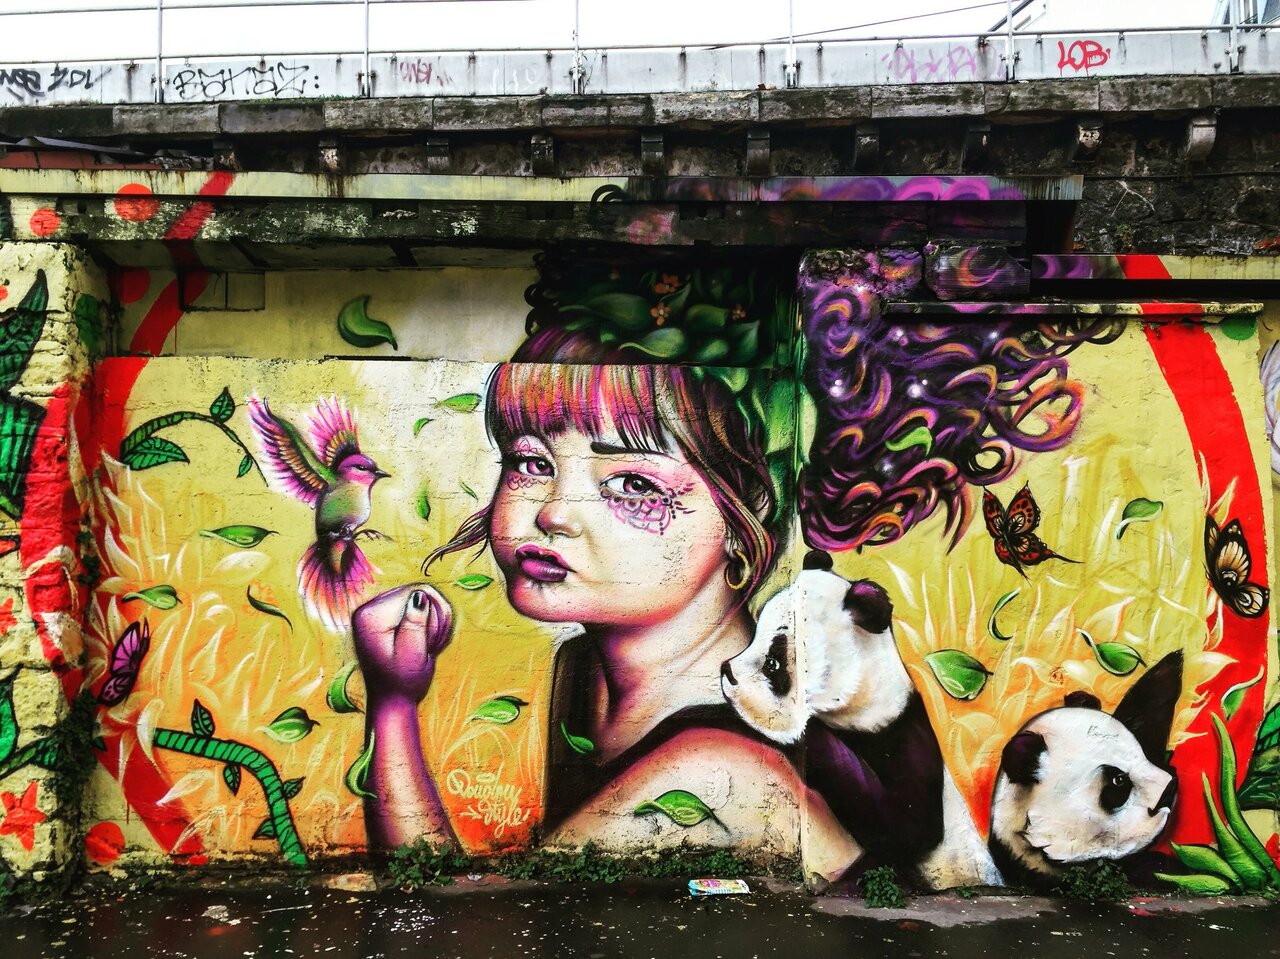 Lil’ Gal & her  by @JessyDoudouStyl #doudoustyle #jessydoudoustyl #panda #streetart #graffiti #spray #bombing #wall #sprayart #instagraff #urbanart #streetphoto #urbanwalls #paris https://t.co/pzOVJYJTYg